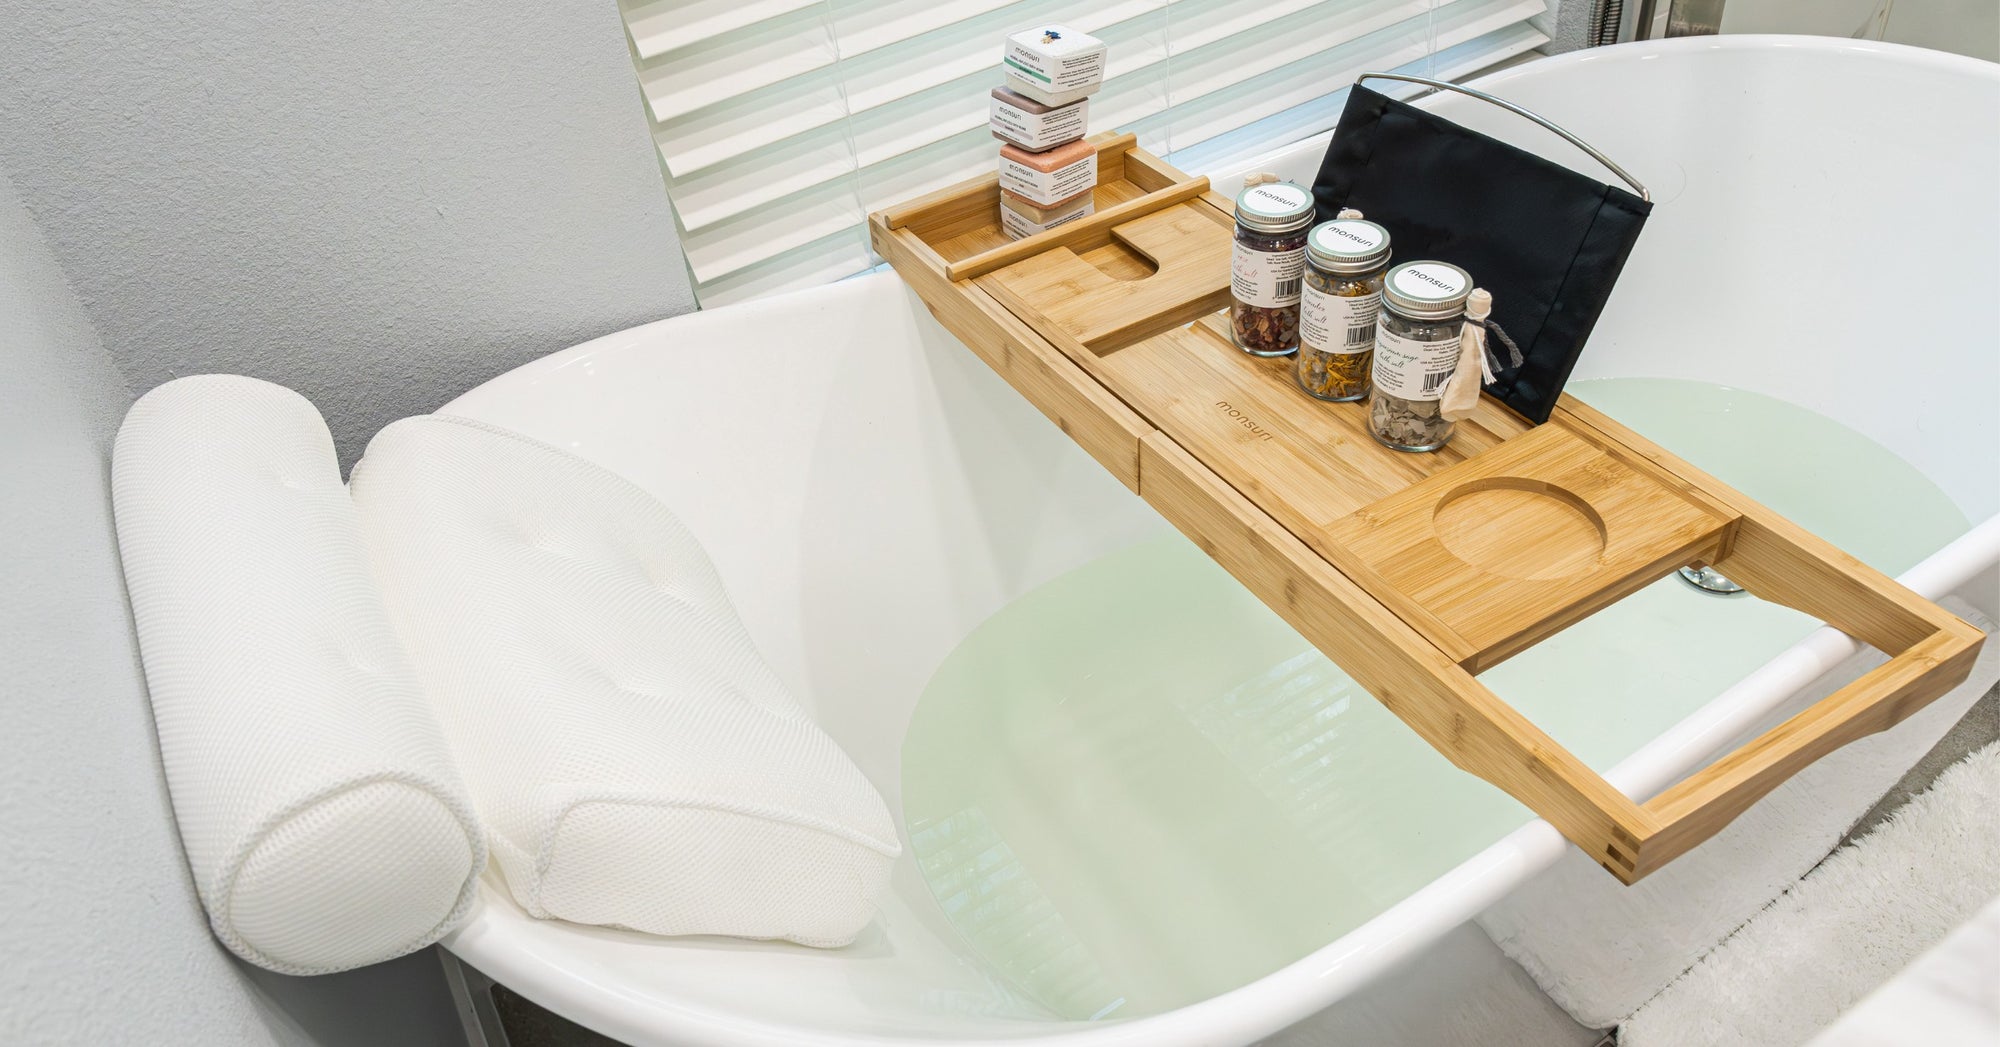 Experience the Joy of Self-Care with Monsuri's Bath Lover's Set